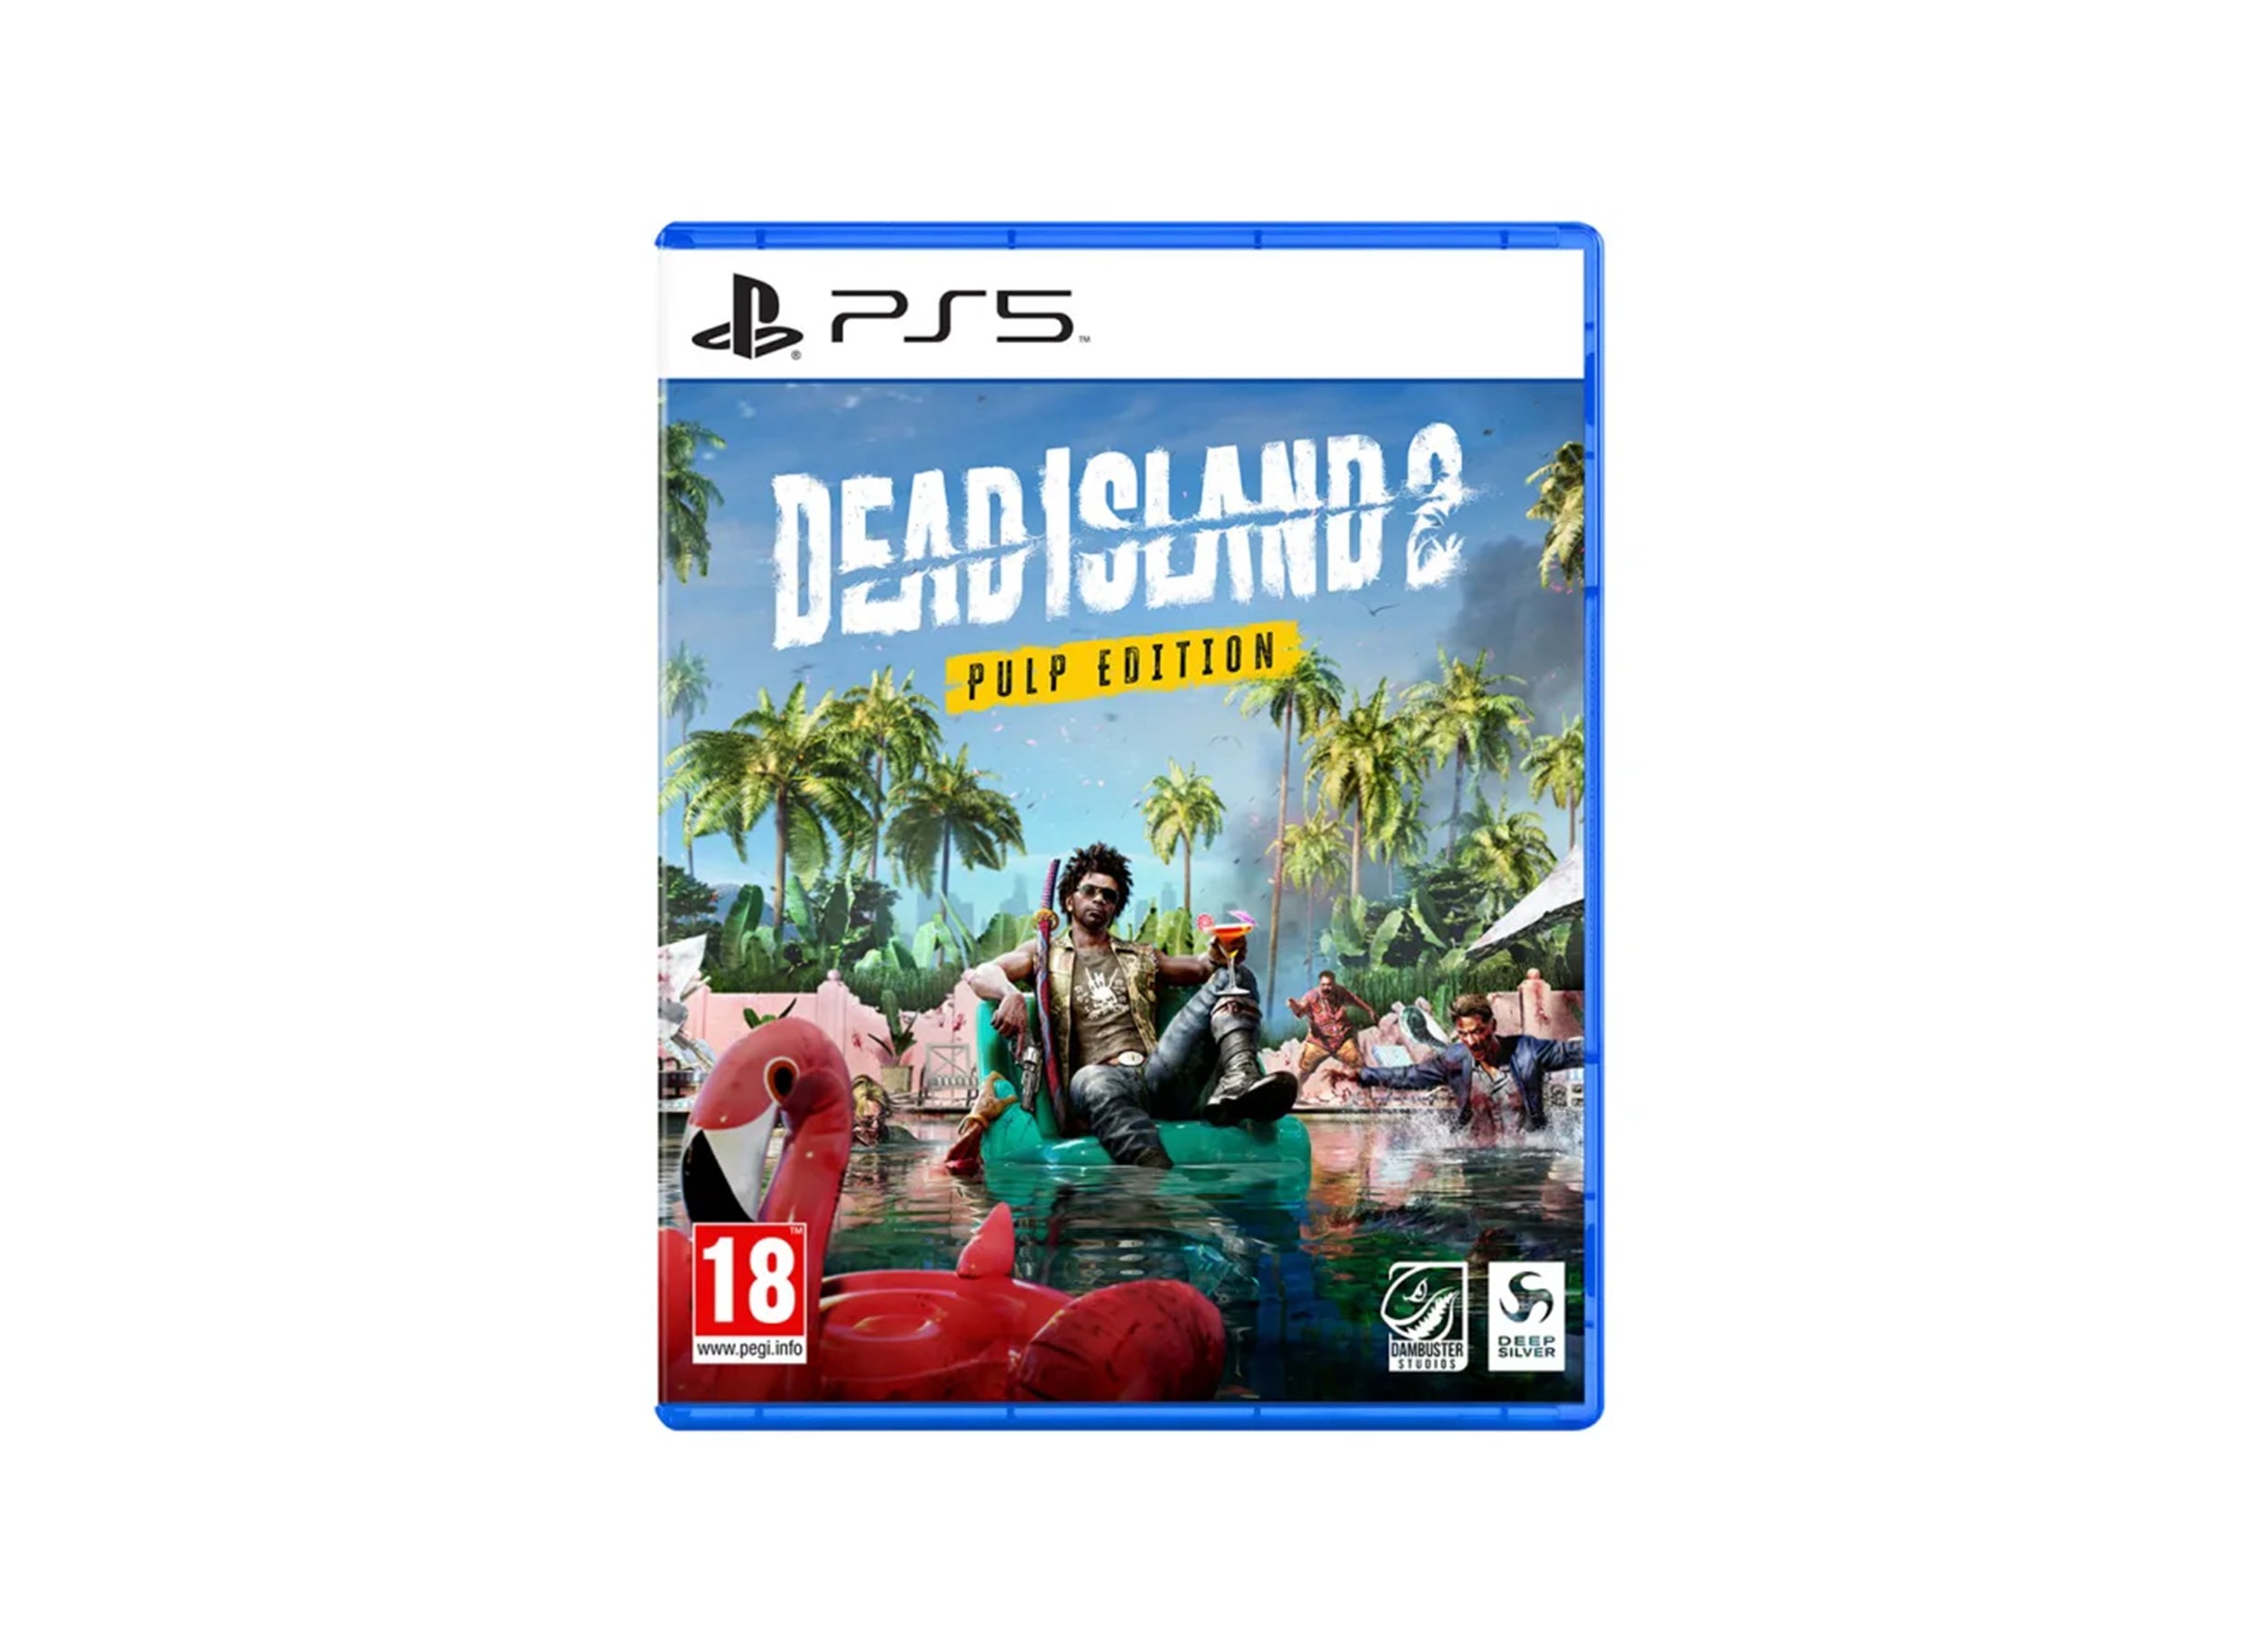 Dead Island 2 Preorders - Last Chance To Get Bonuses Ahead Of